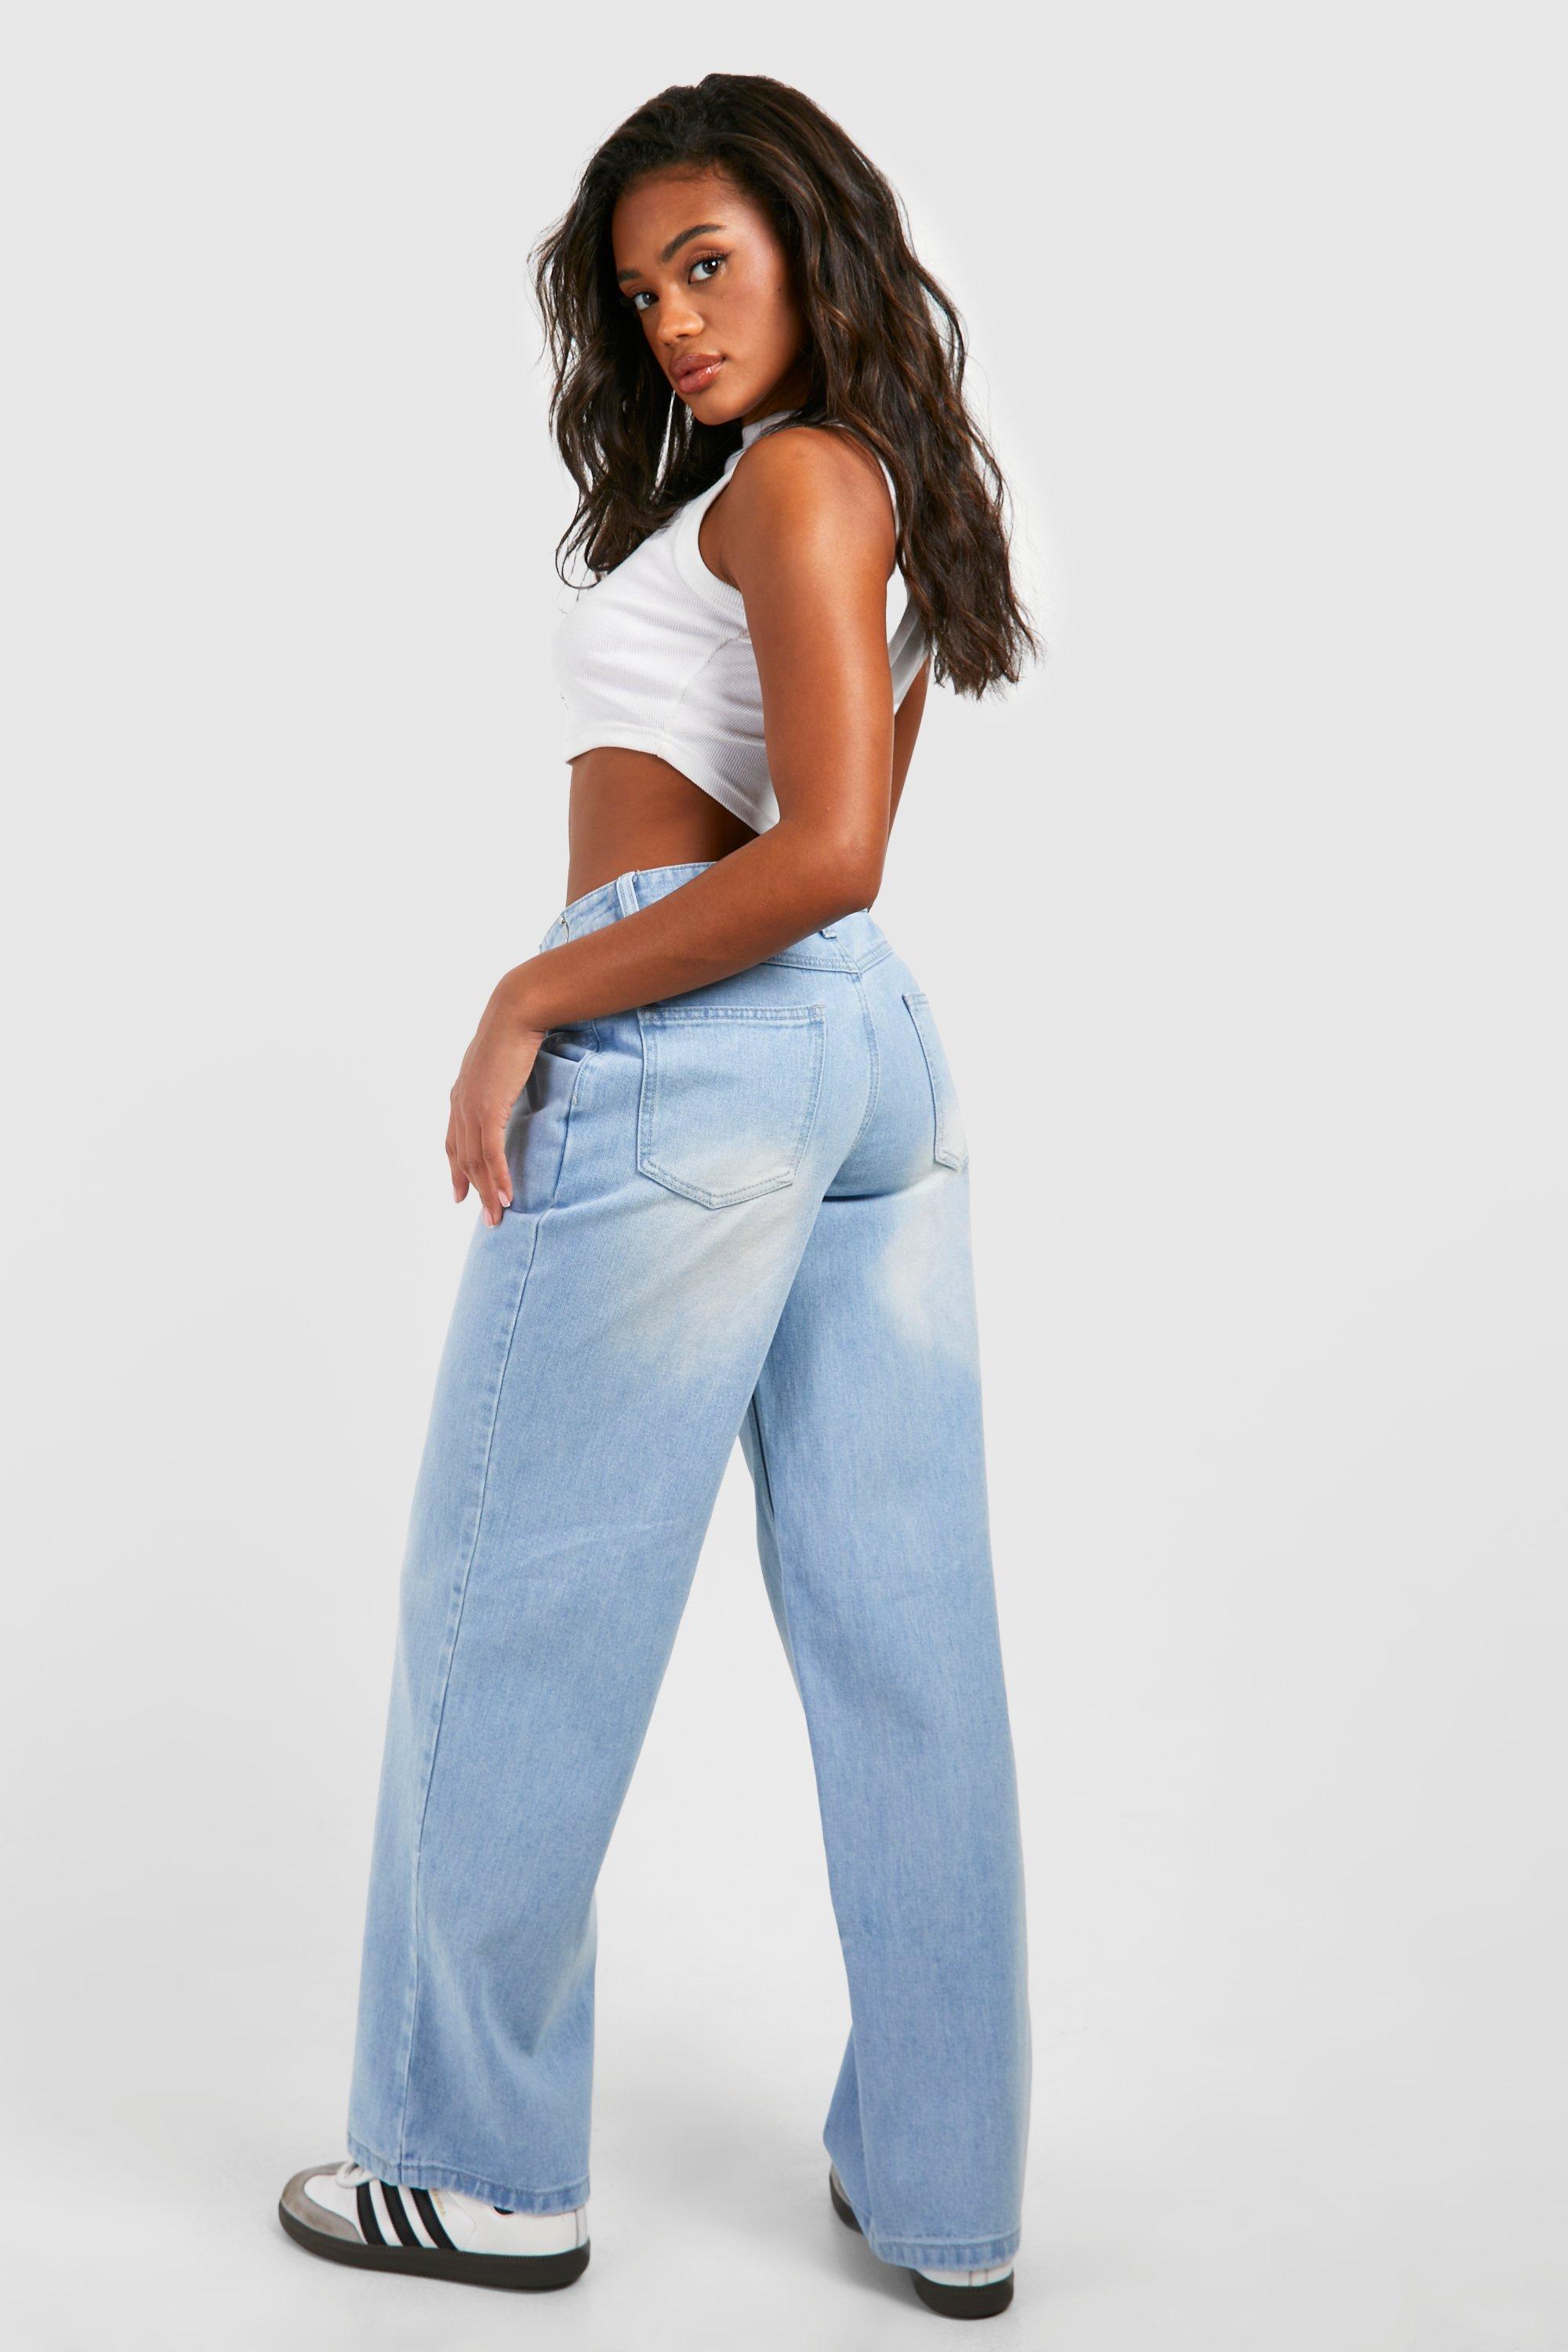 Adjustable baggy jeans - Women's fashion